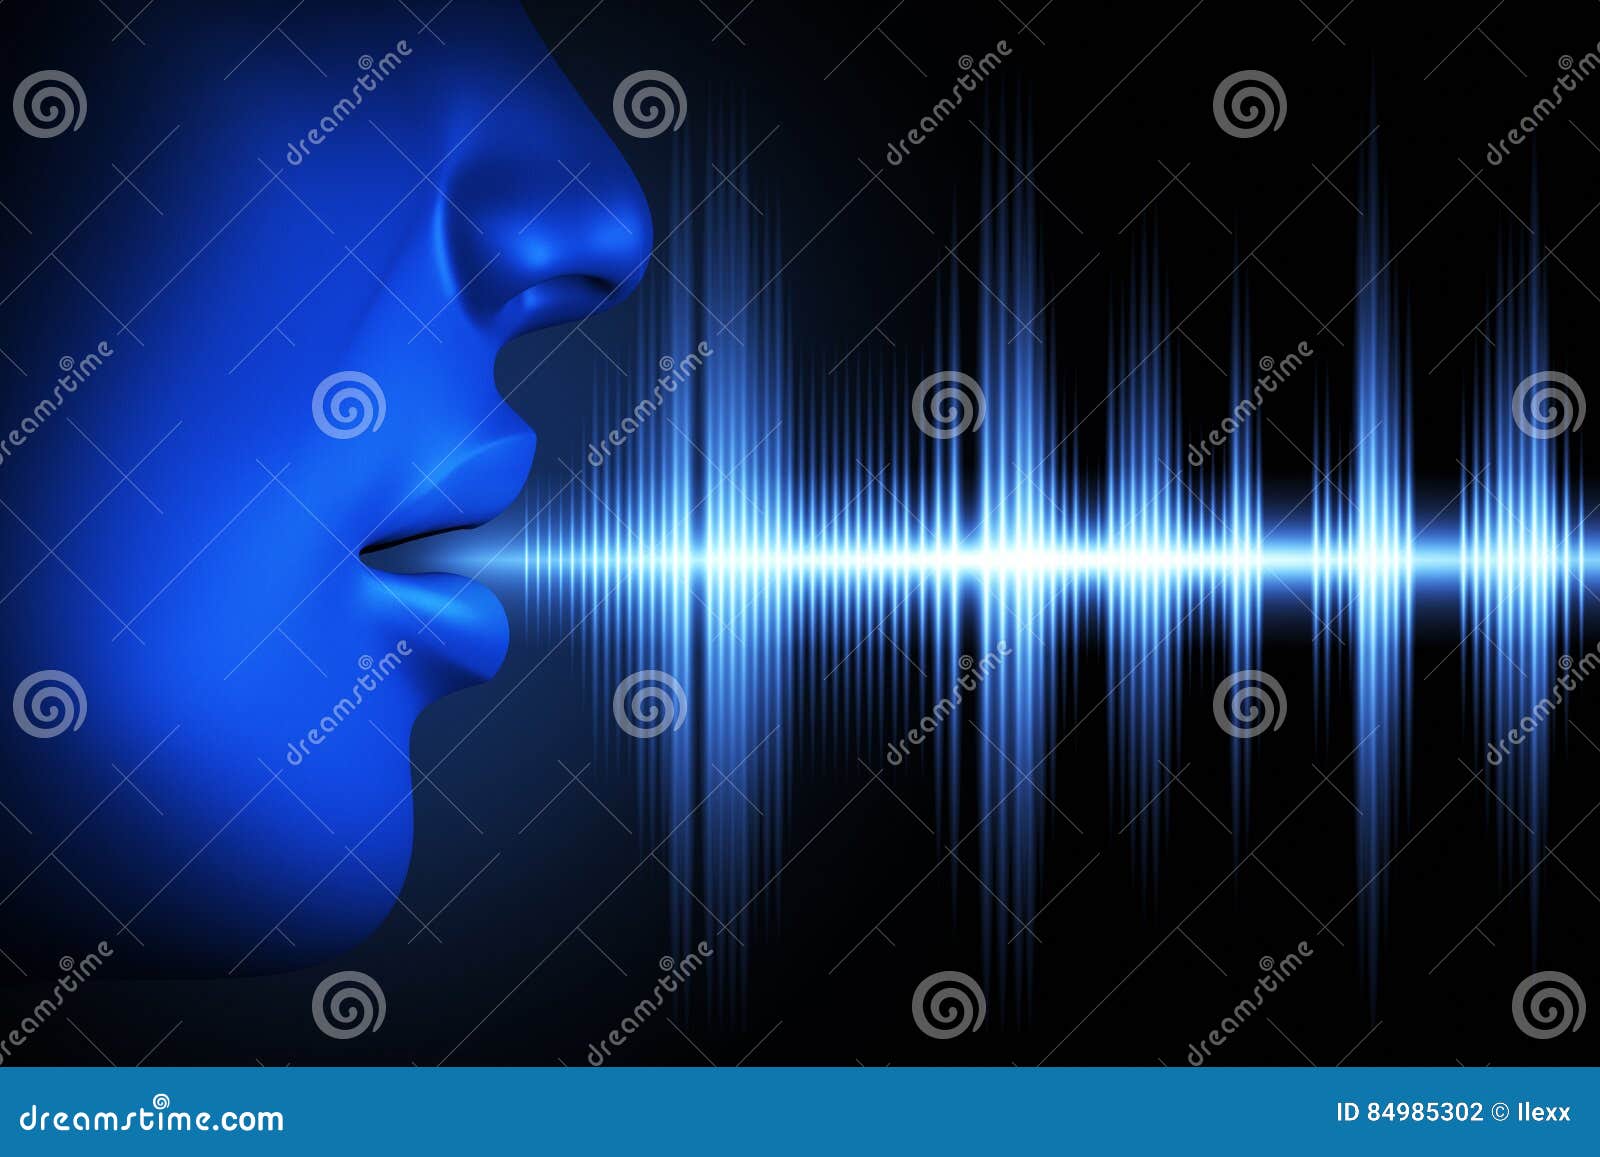 sound wave of voice